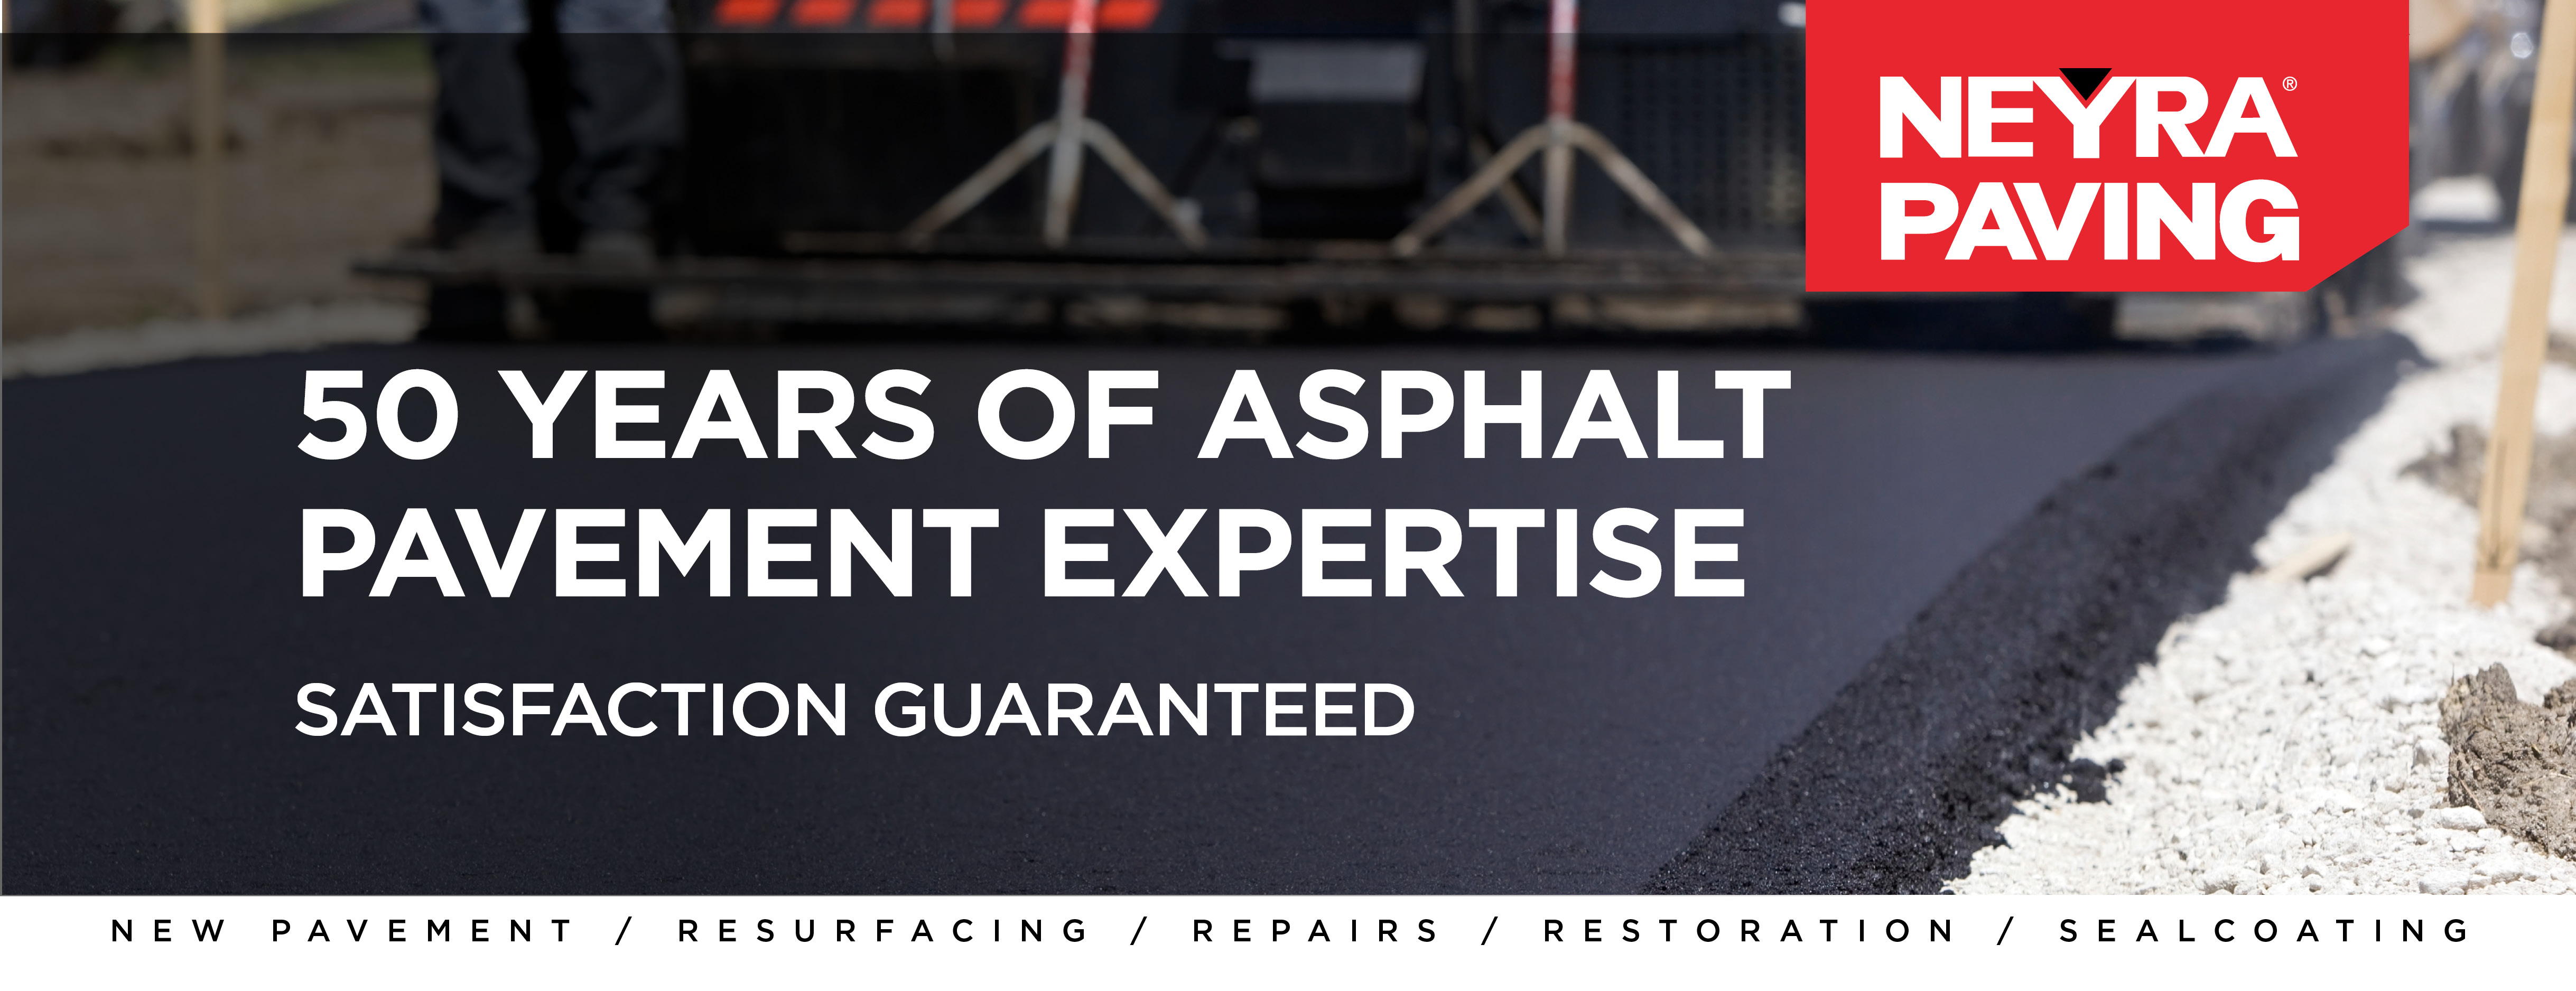 Cincinnati Asphalt Pavement Experts